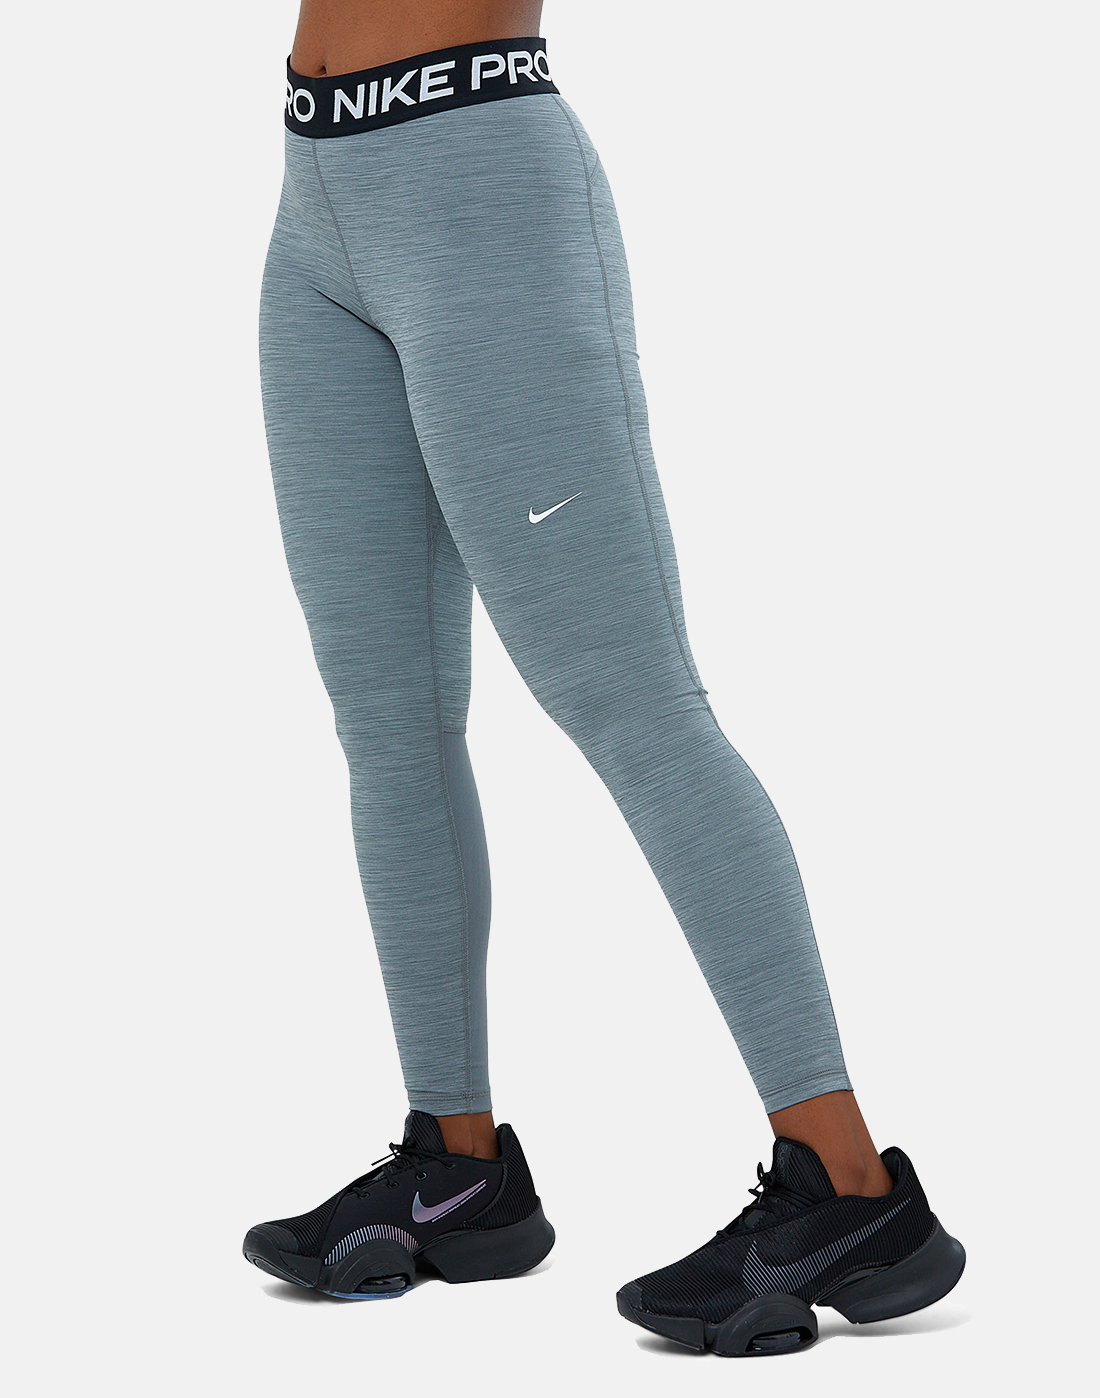 Nike Womens Pro 365 Leggings - Grey